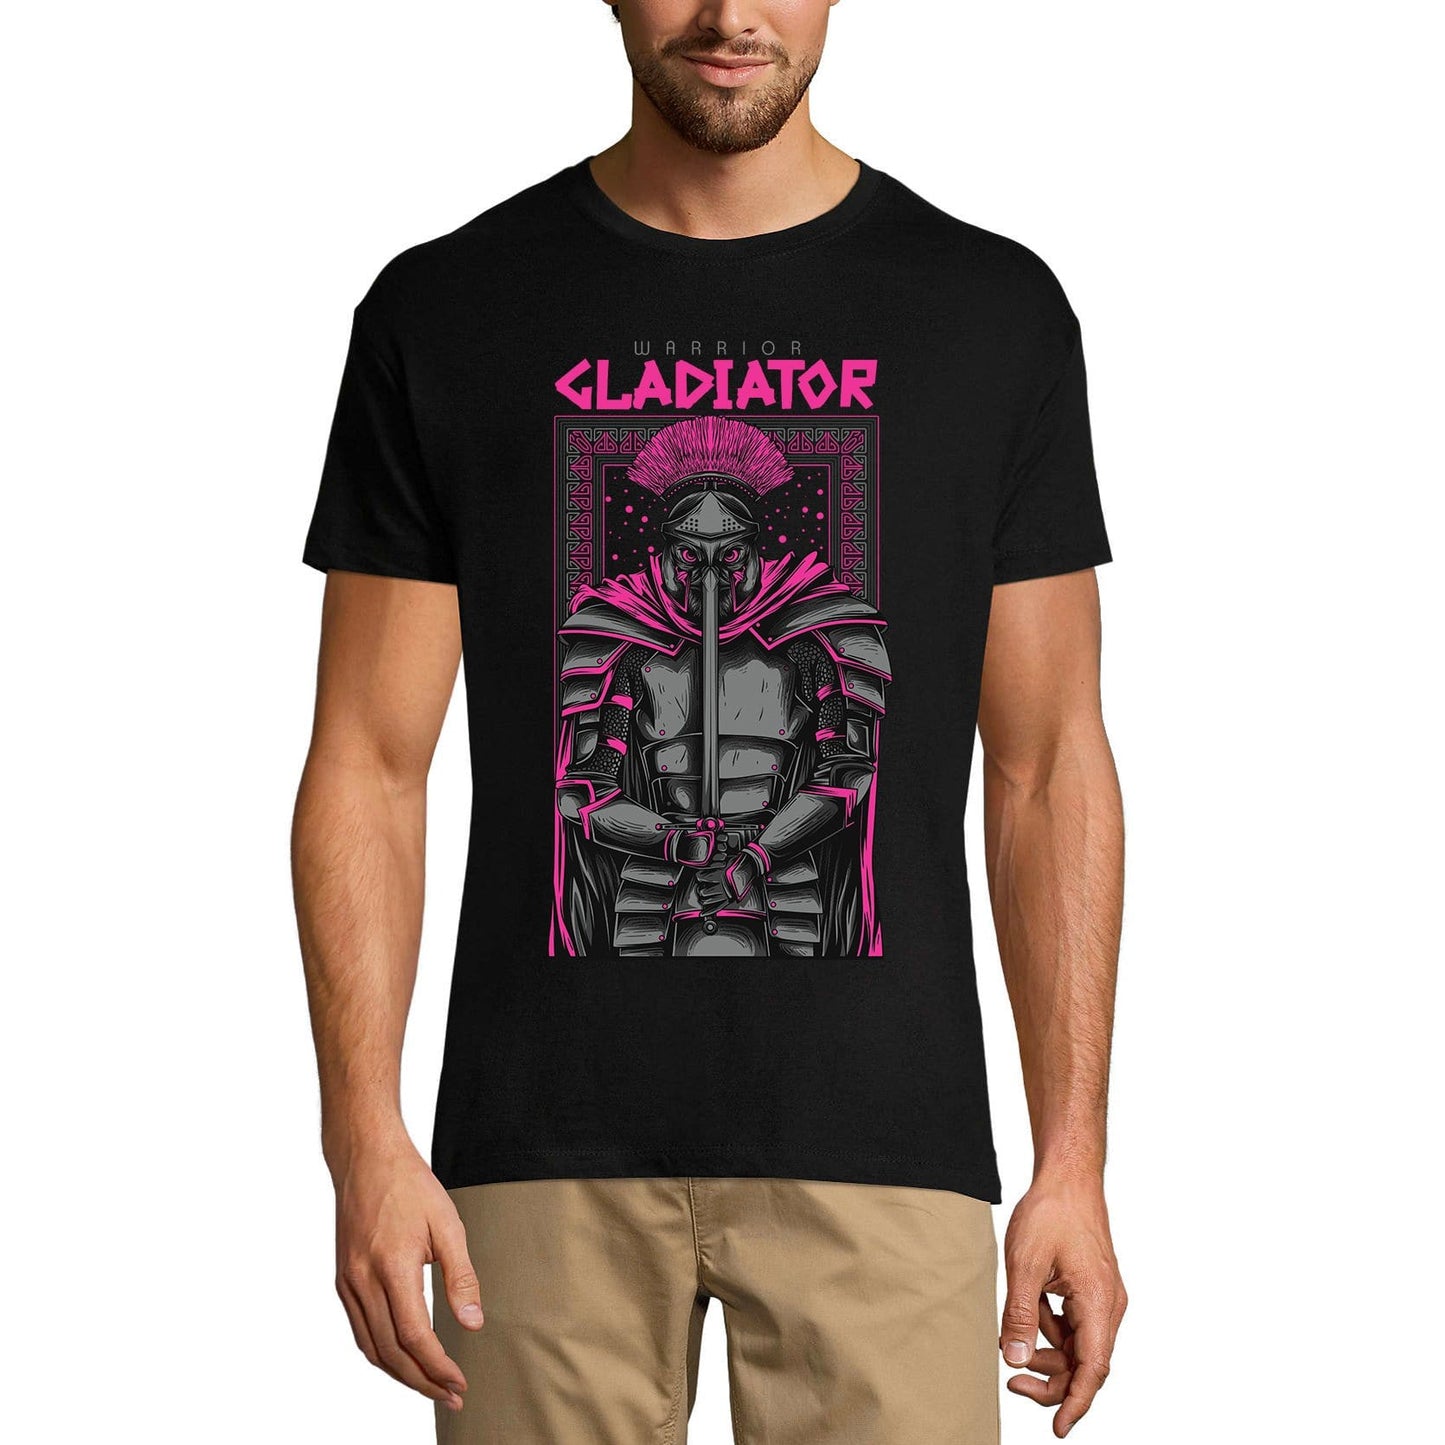 ULTRABASIC Men's Novelty T-Shirt Warrior Gladiator - Scary Short Sleeve Tee Shirt